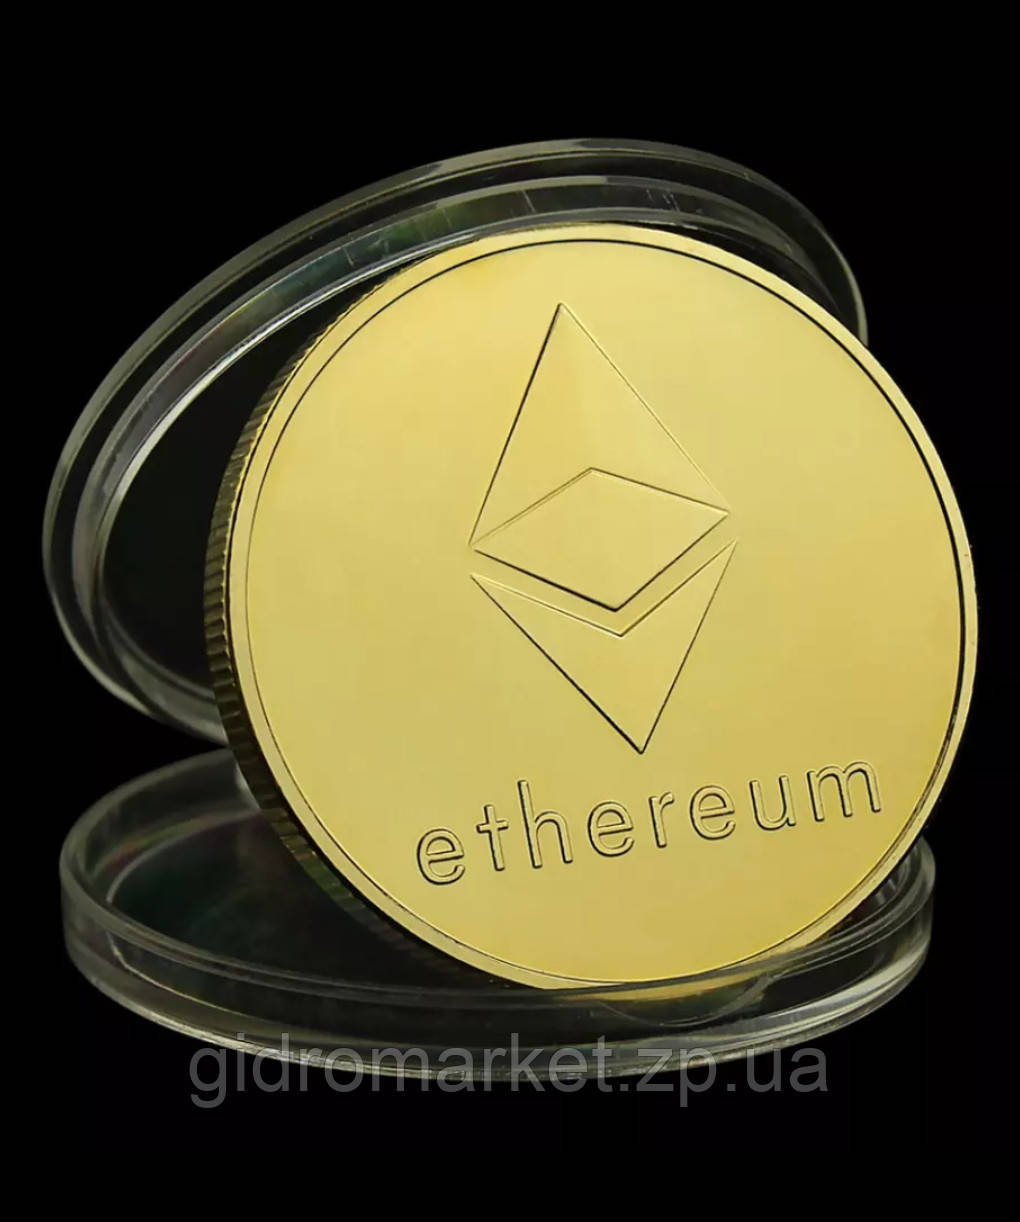 Сувенірна монета Ефіріум Ethereum у капсулі колір: золото